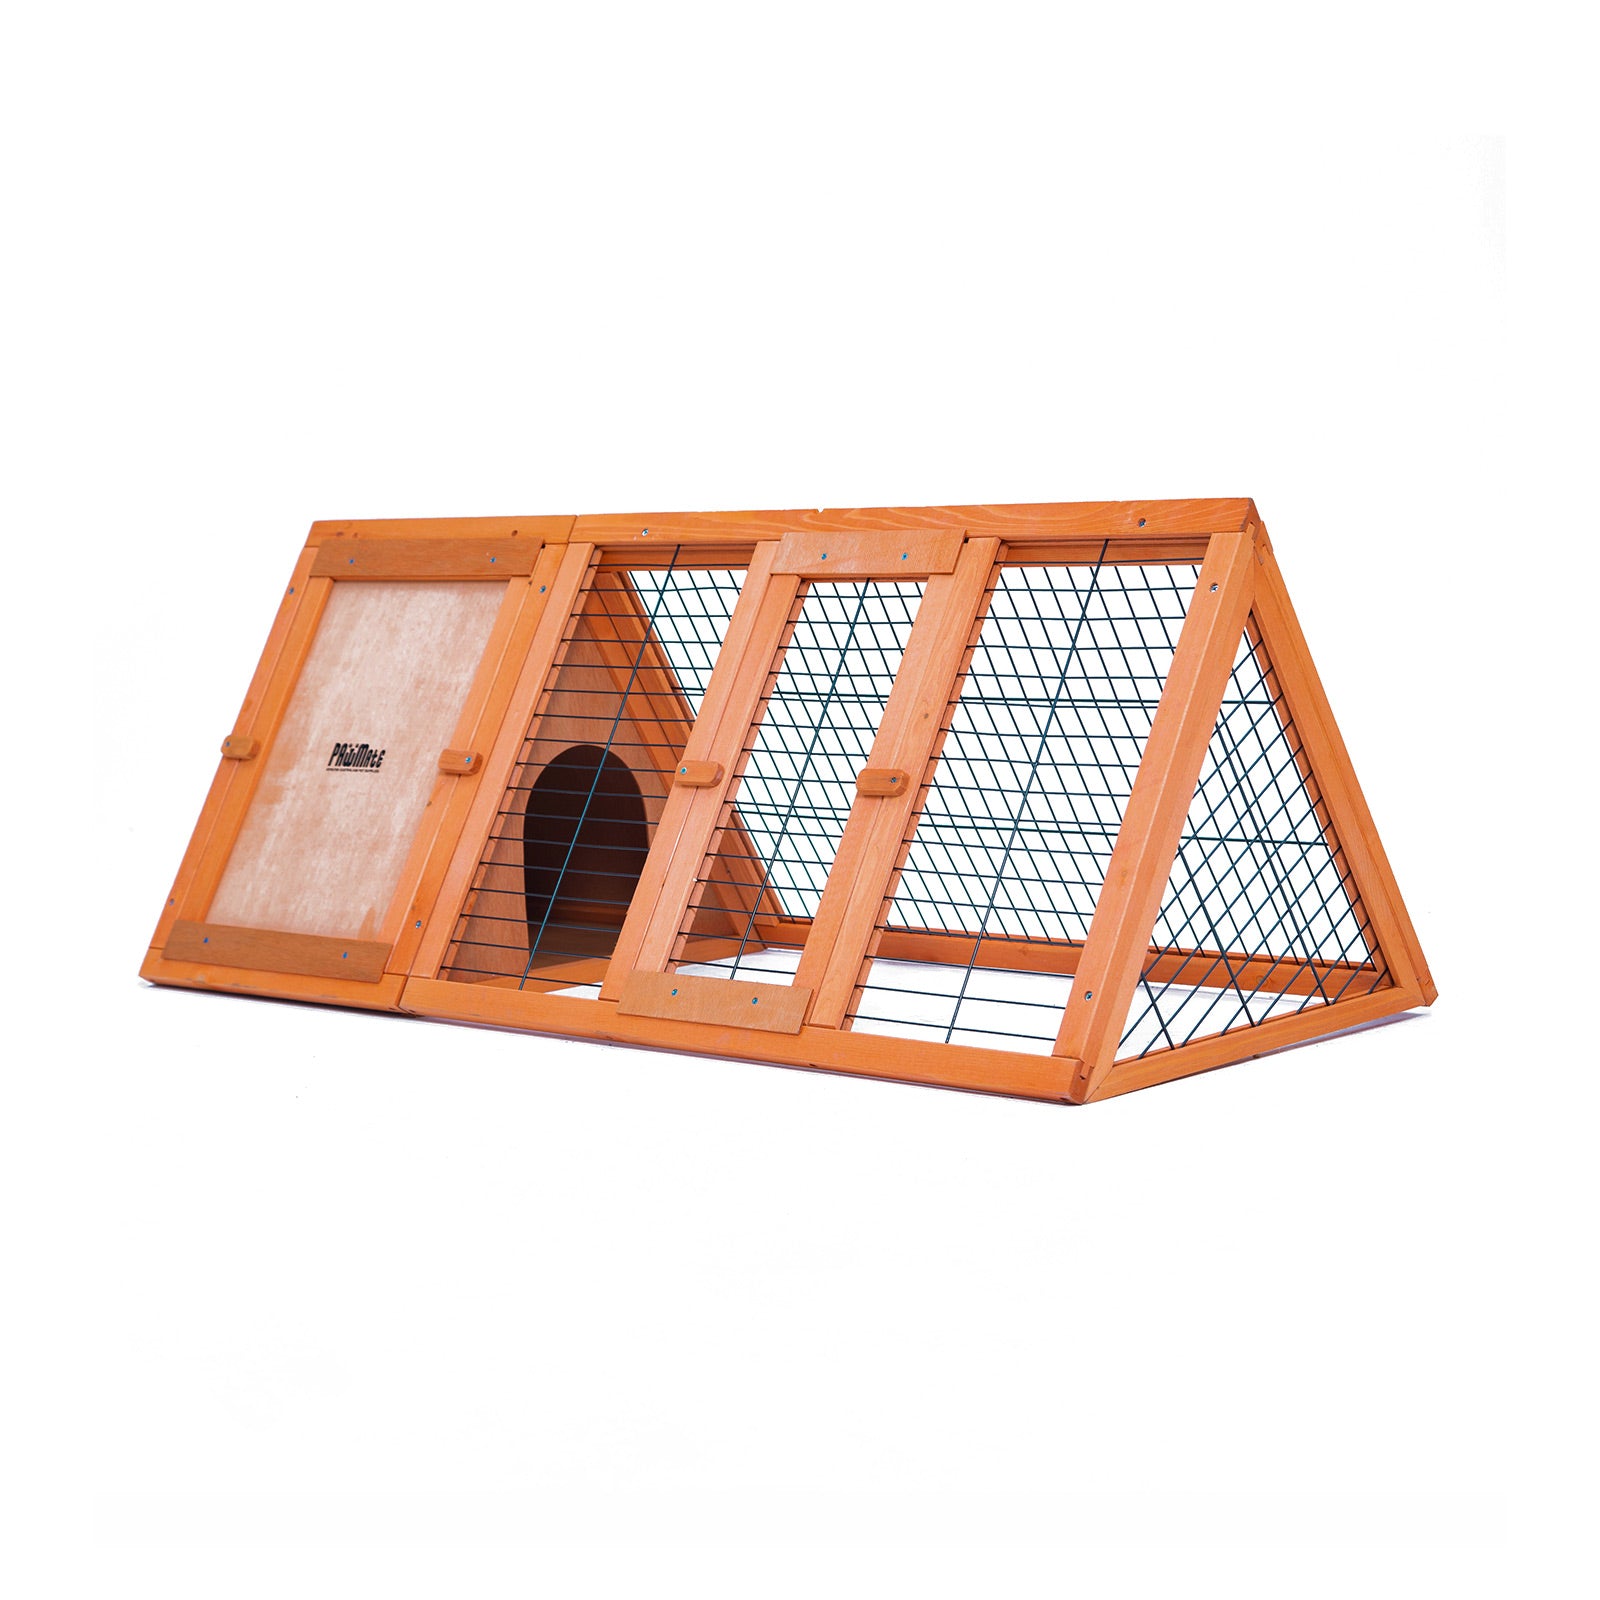 Paw Mate 118 x 50 x 45cm Rabbit Hutch Chicken Coop Triangle Cage Run